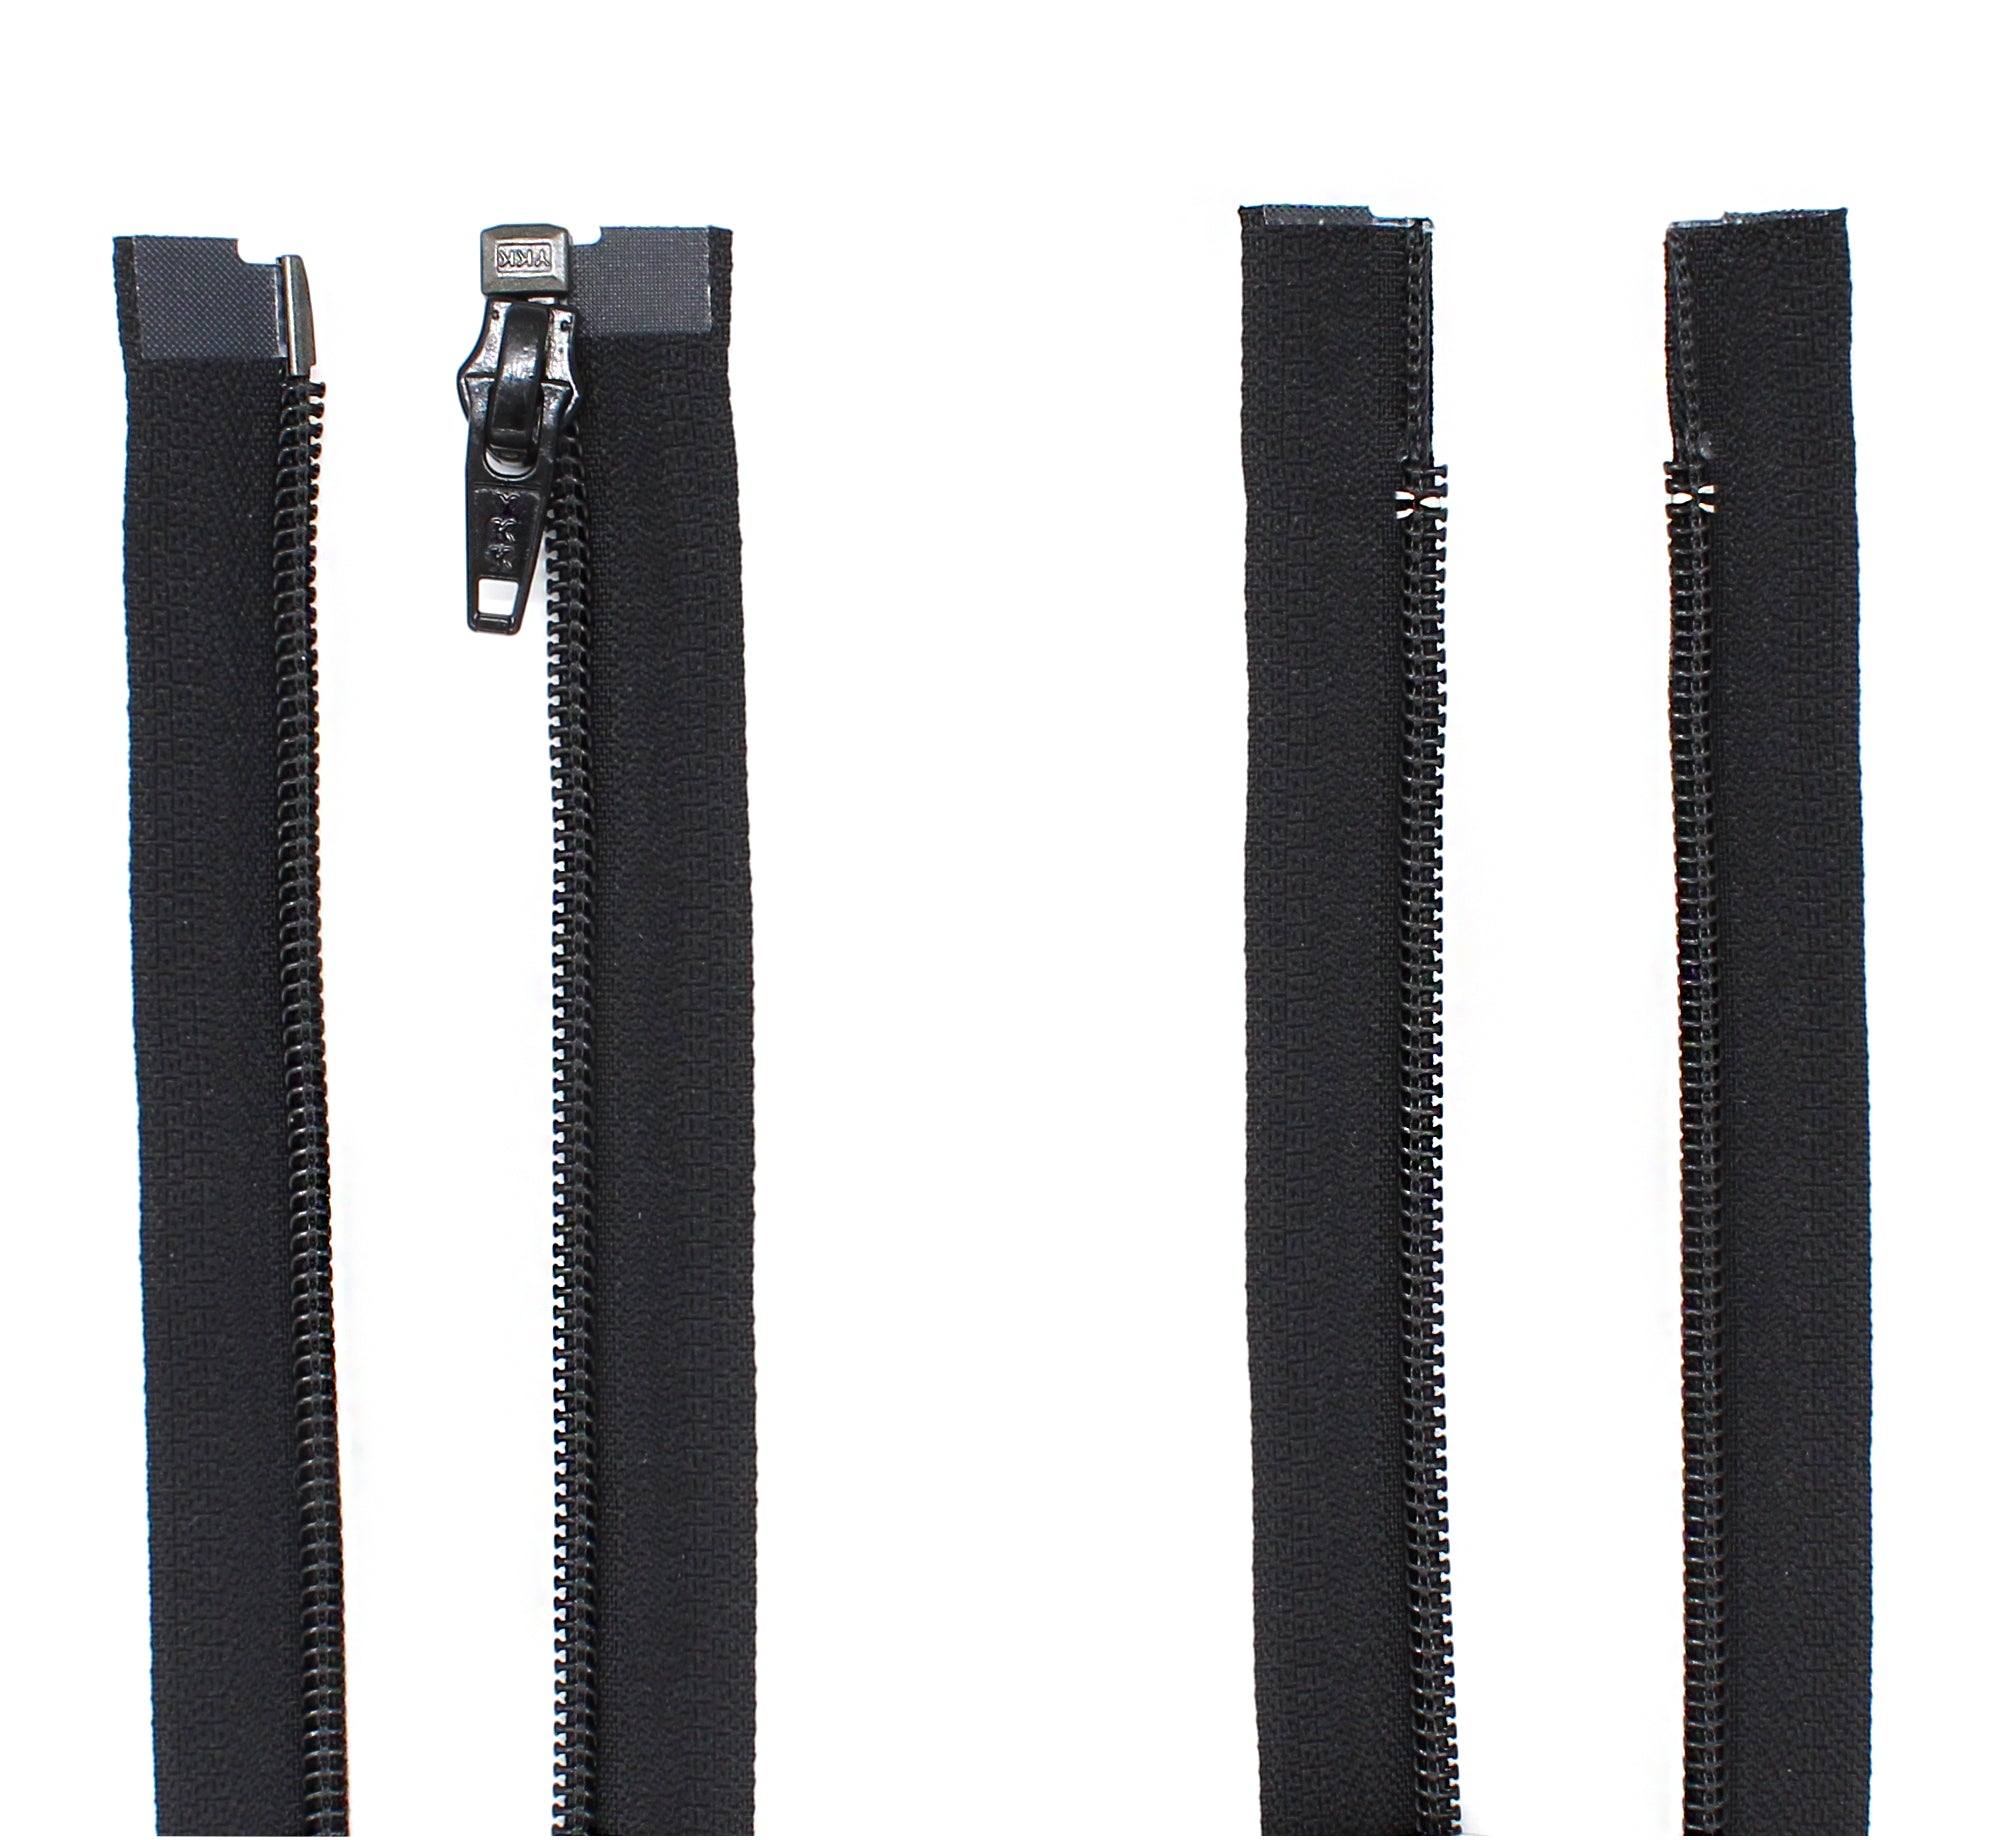  YKK® 30 Jacket Zipper ~ YKK #5 Aluminum Metal ~ Medium Weight  YKK Zipper ~ Separating ~ Black (1 Zipper) Made in USA